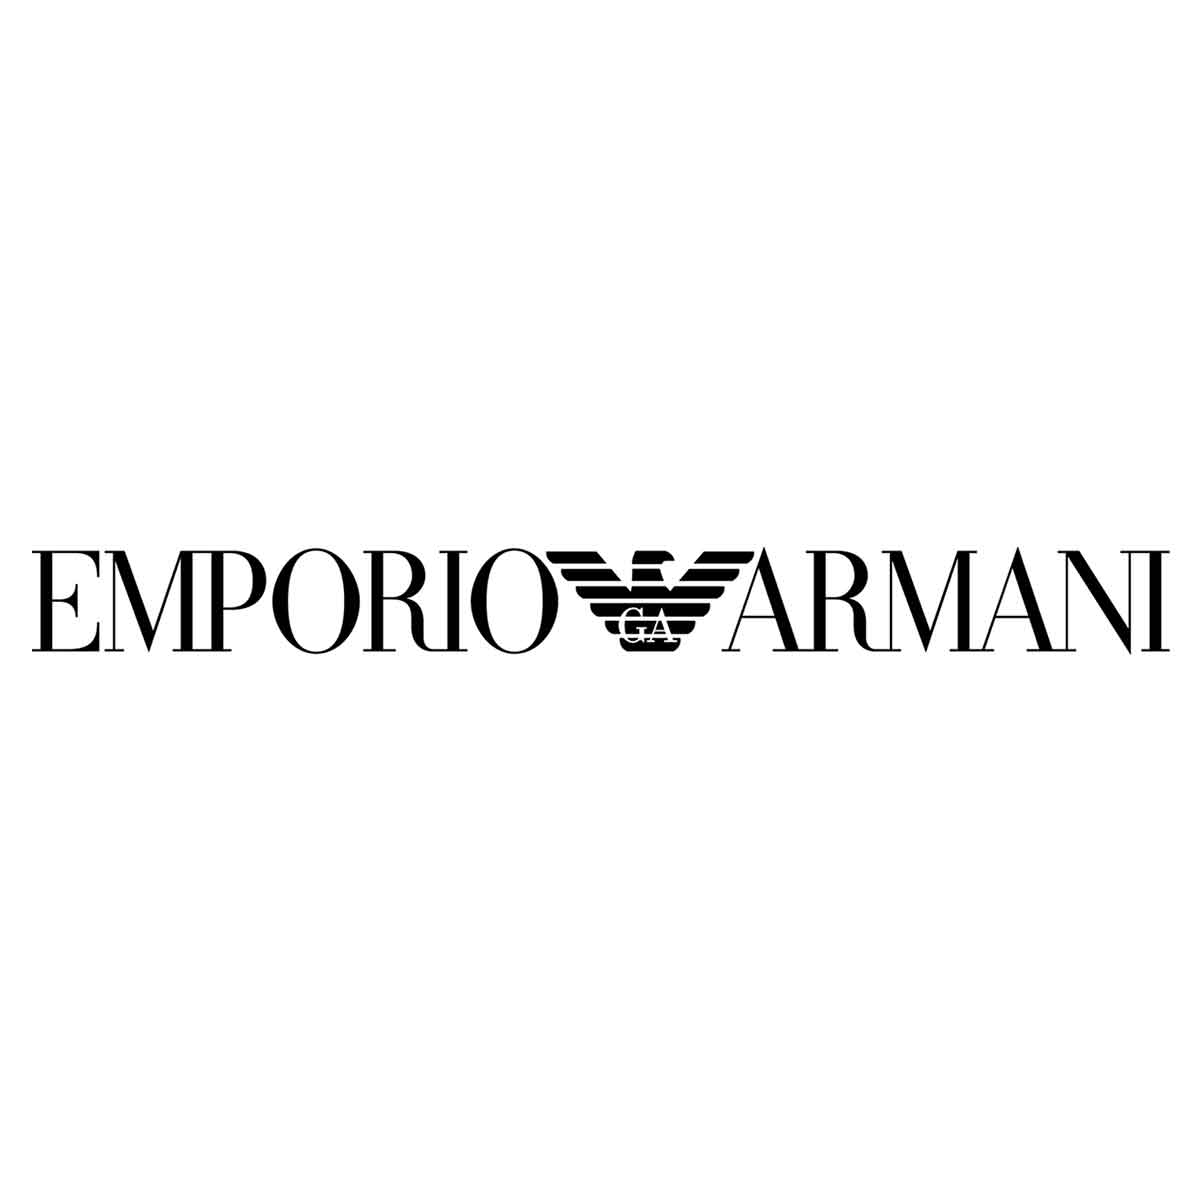 Flash Sale Sign Up - Emporio Armani